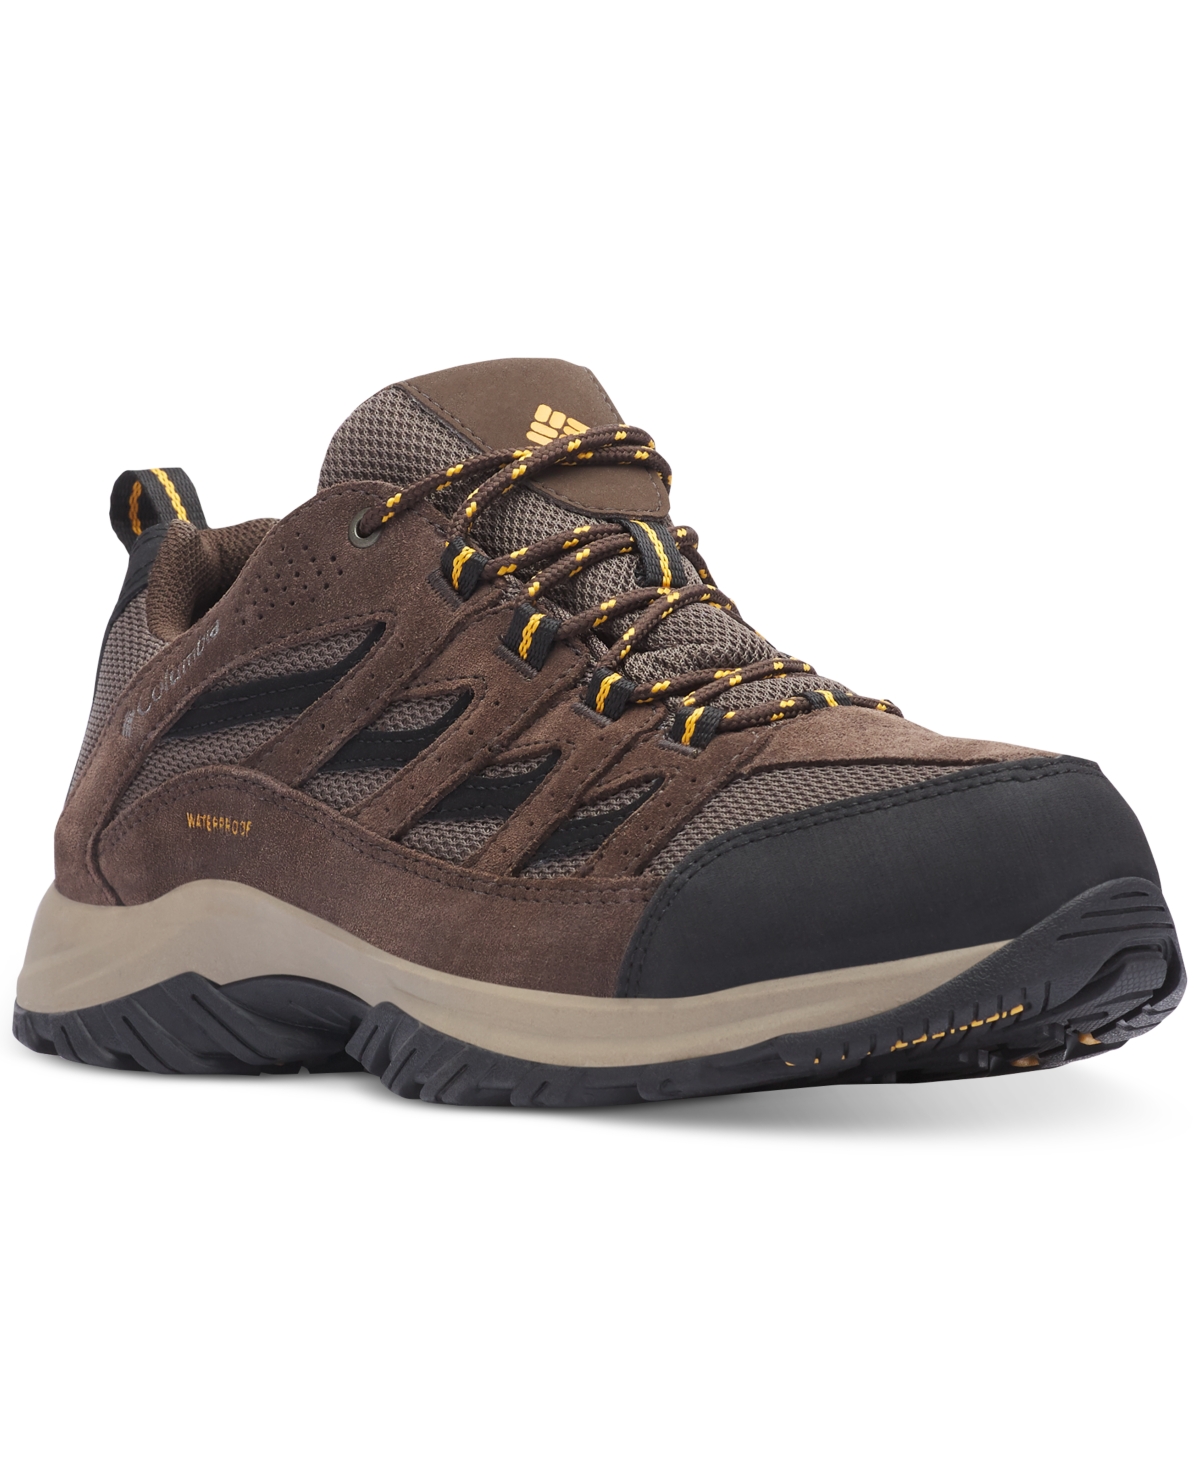 Men's Crestwood Waterproof Trail Boots - Elk, Black